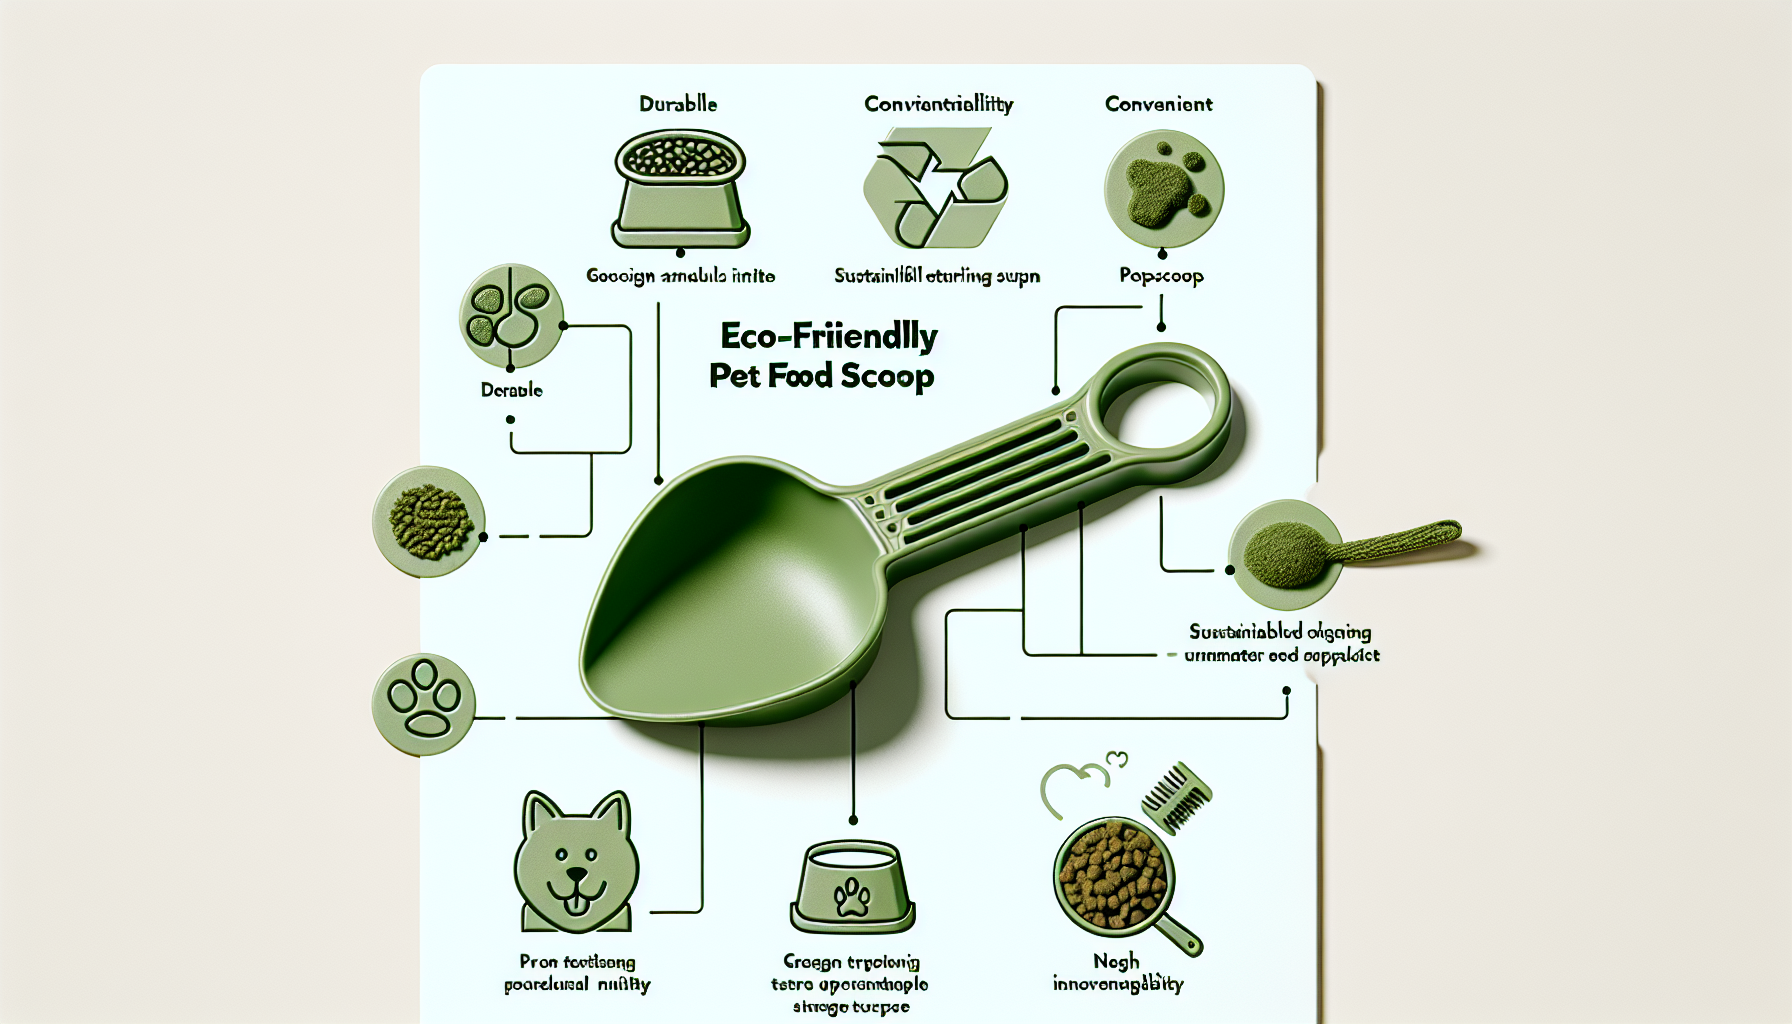 POPSCOOPS Versatile Eco-Friendly Pet Food Scoop Review